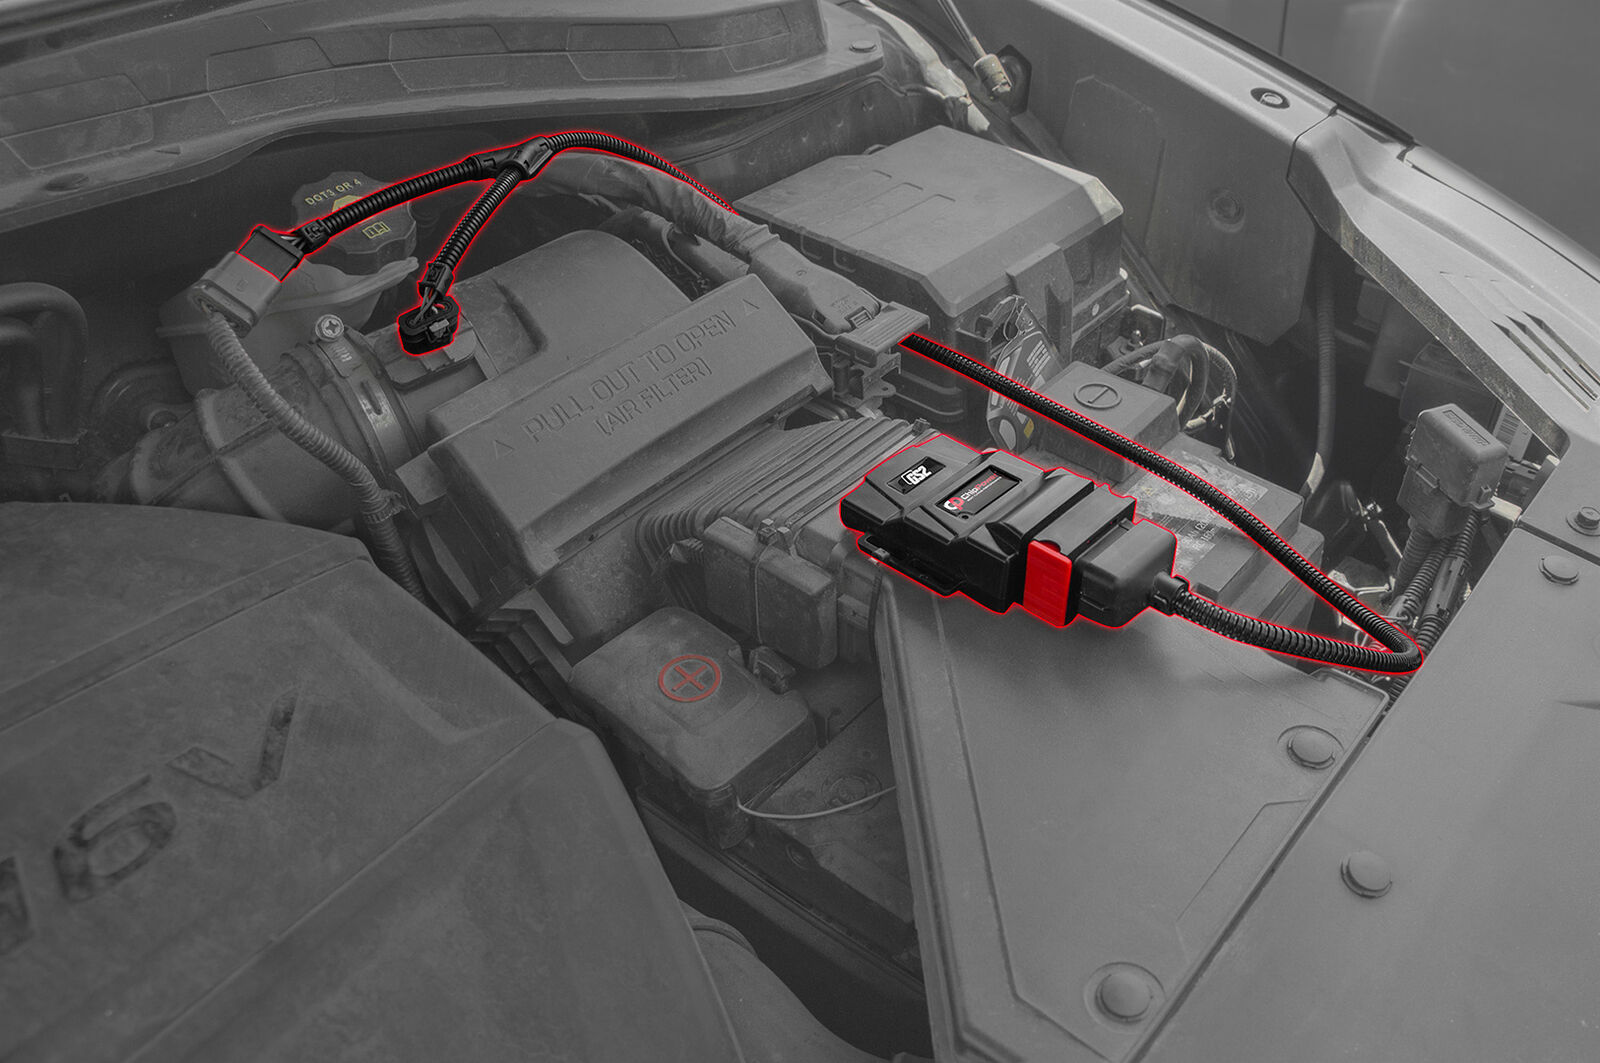 DE Chiptuning für Audi A3 (8P) 1.6 FSI 85 kW 115 PS Chip Tuning Box Benzin GS2